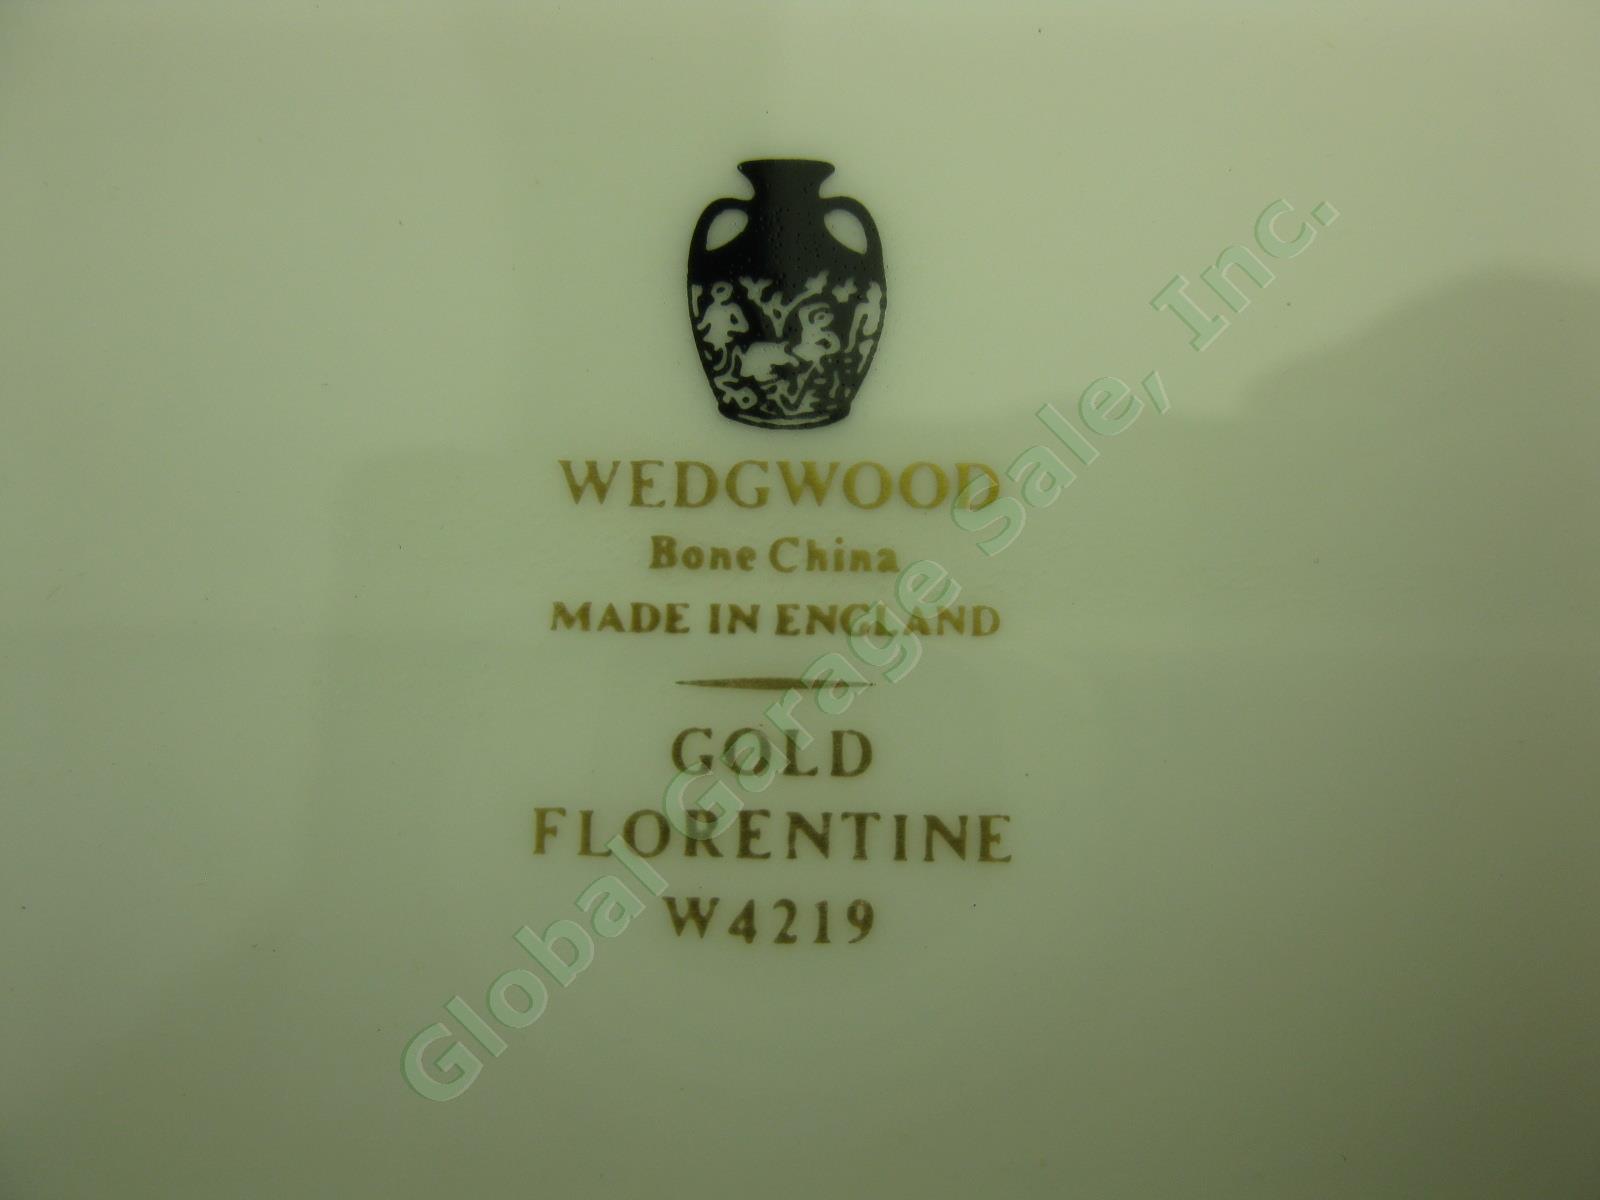 Wedgwood Gold Florentine Dragon China 15.5" x 11.5" Oval Serving Platter #W4219 7